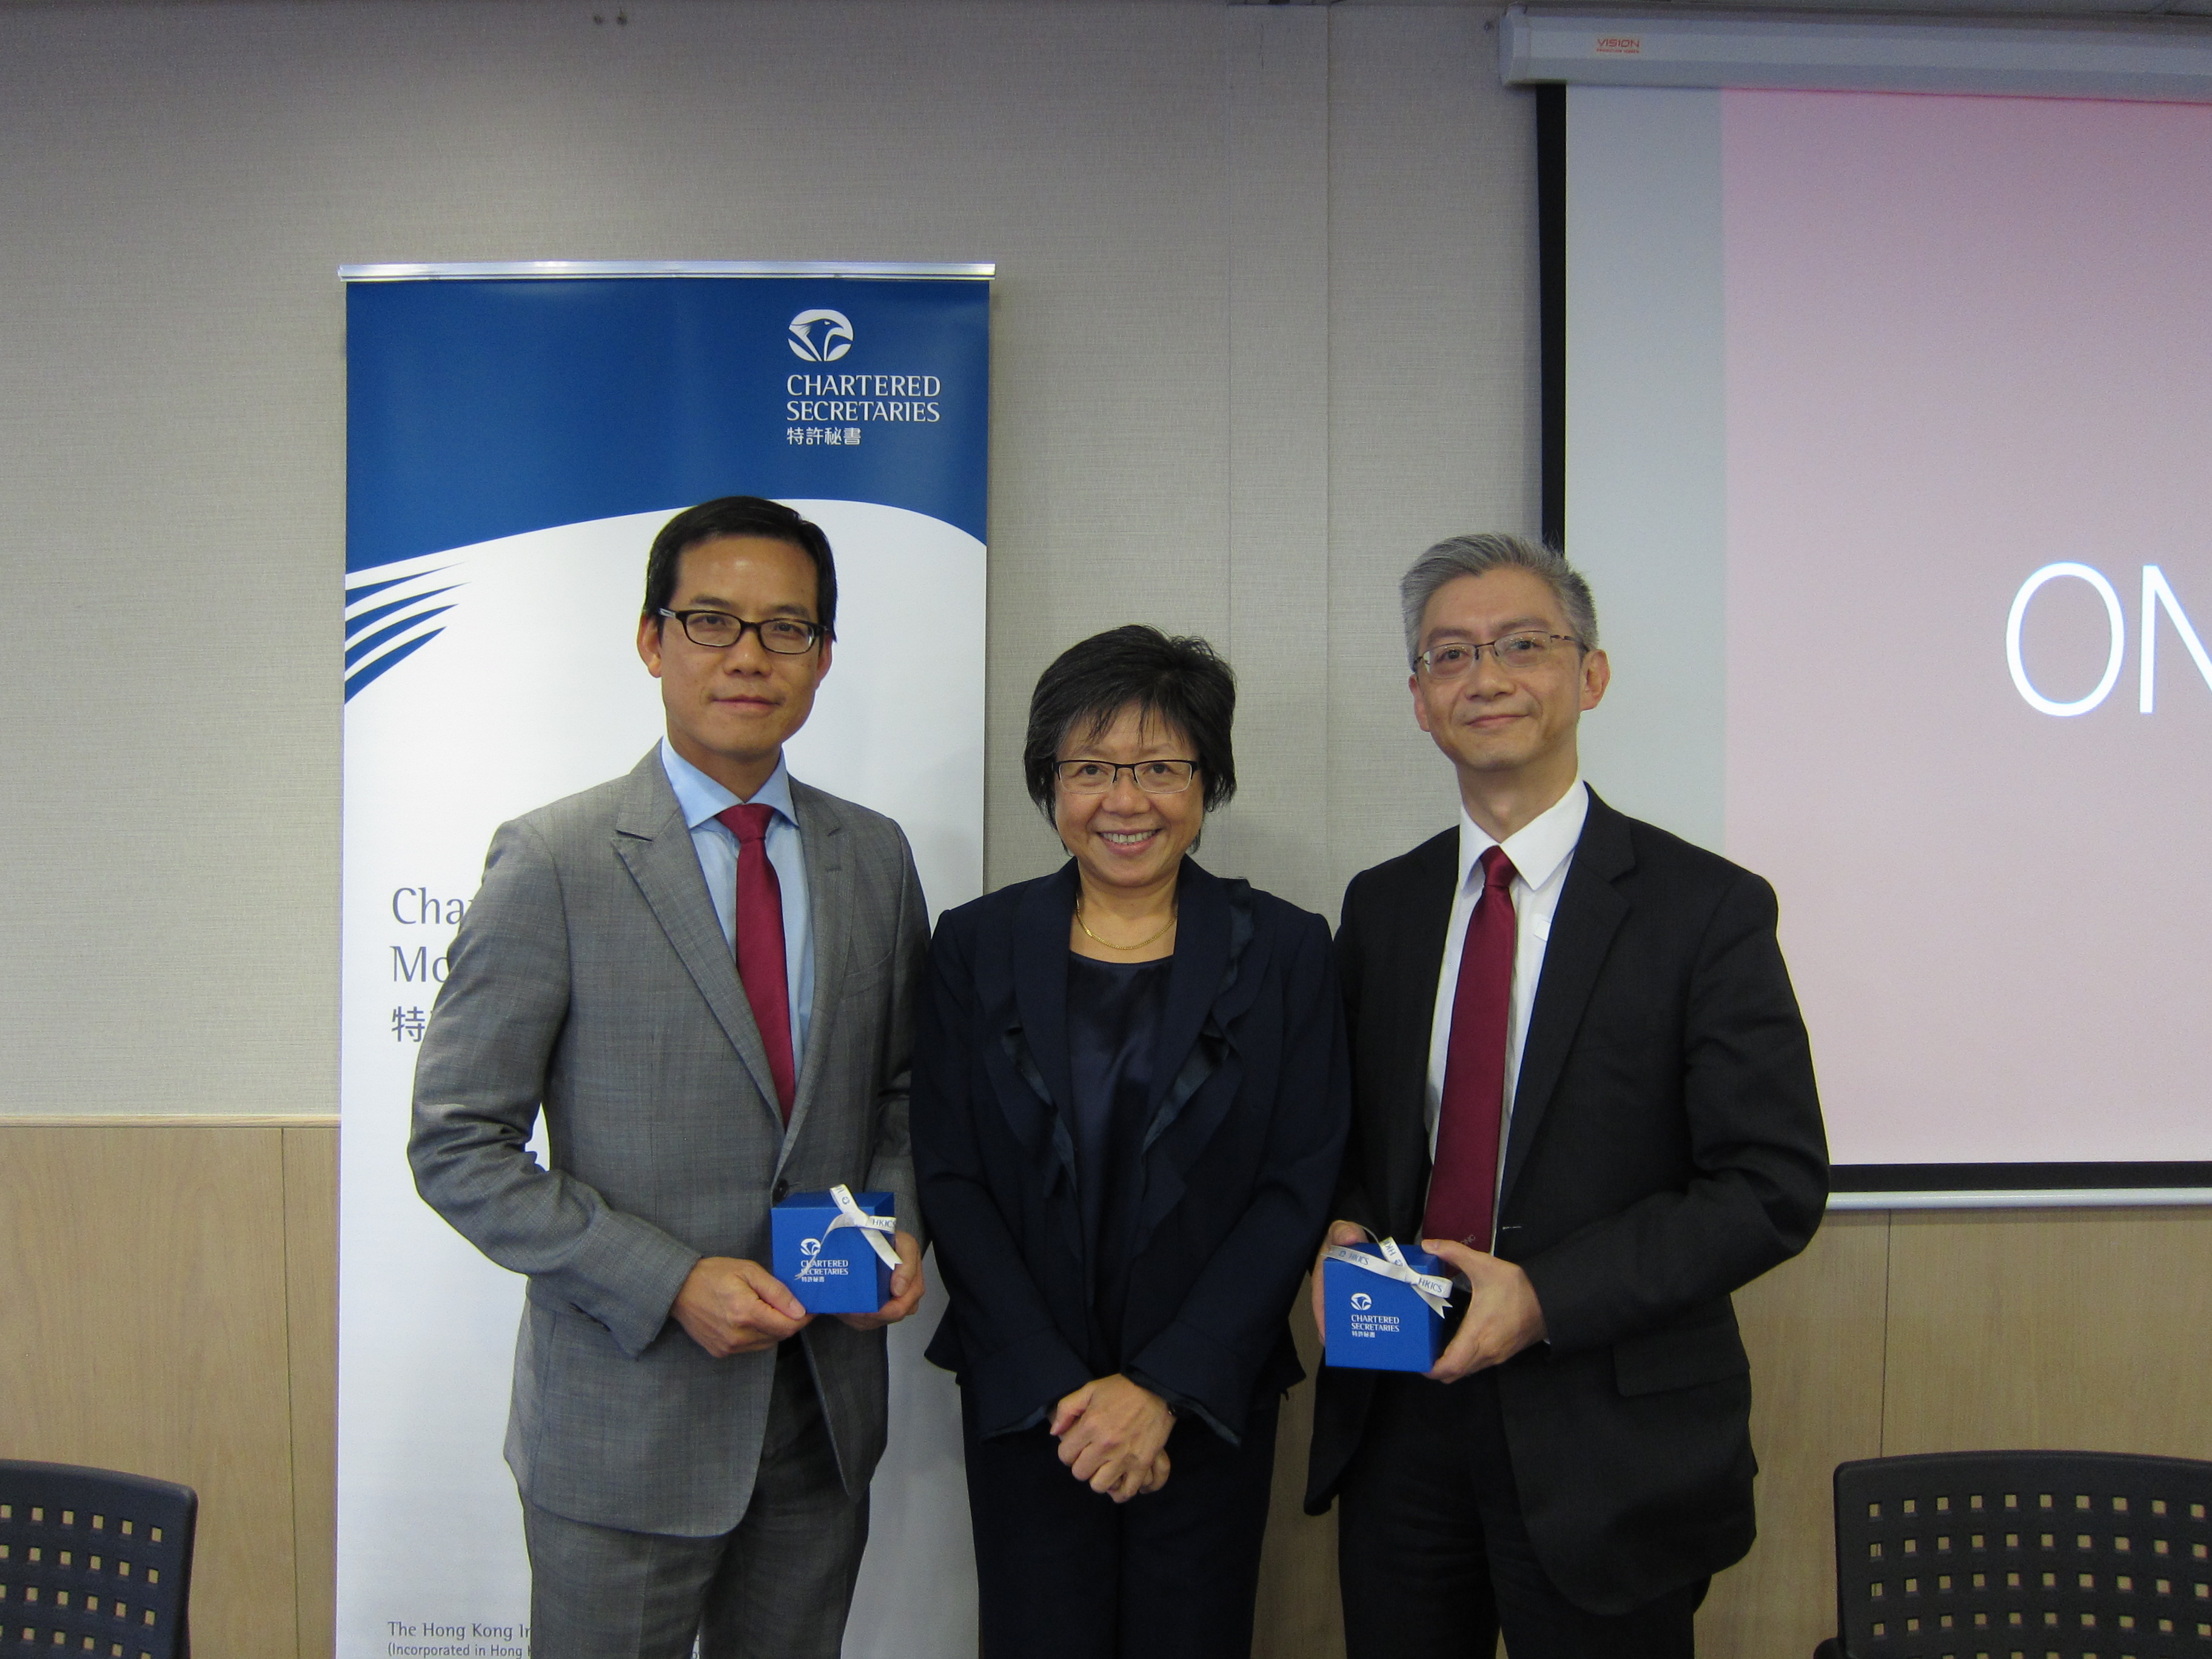 Sherman Yan & Dominic Wai of ONC Lawyers gave a seminar for the Hong Kong Institute of Company Secretaries on dawn raids and investigative powers of regulators